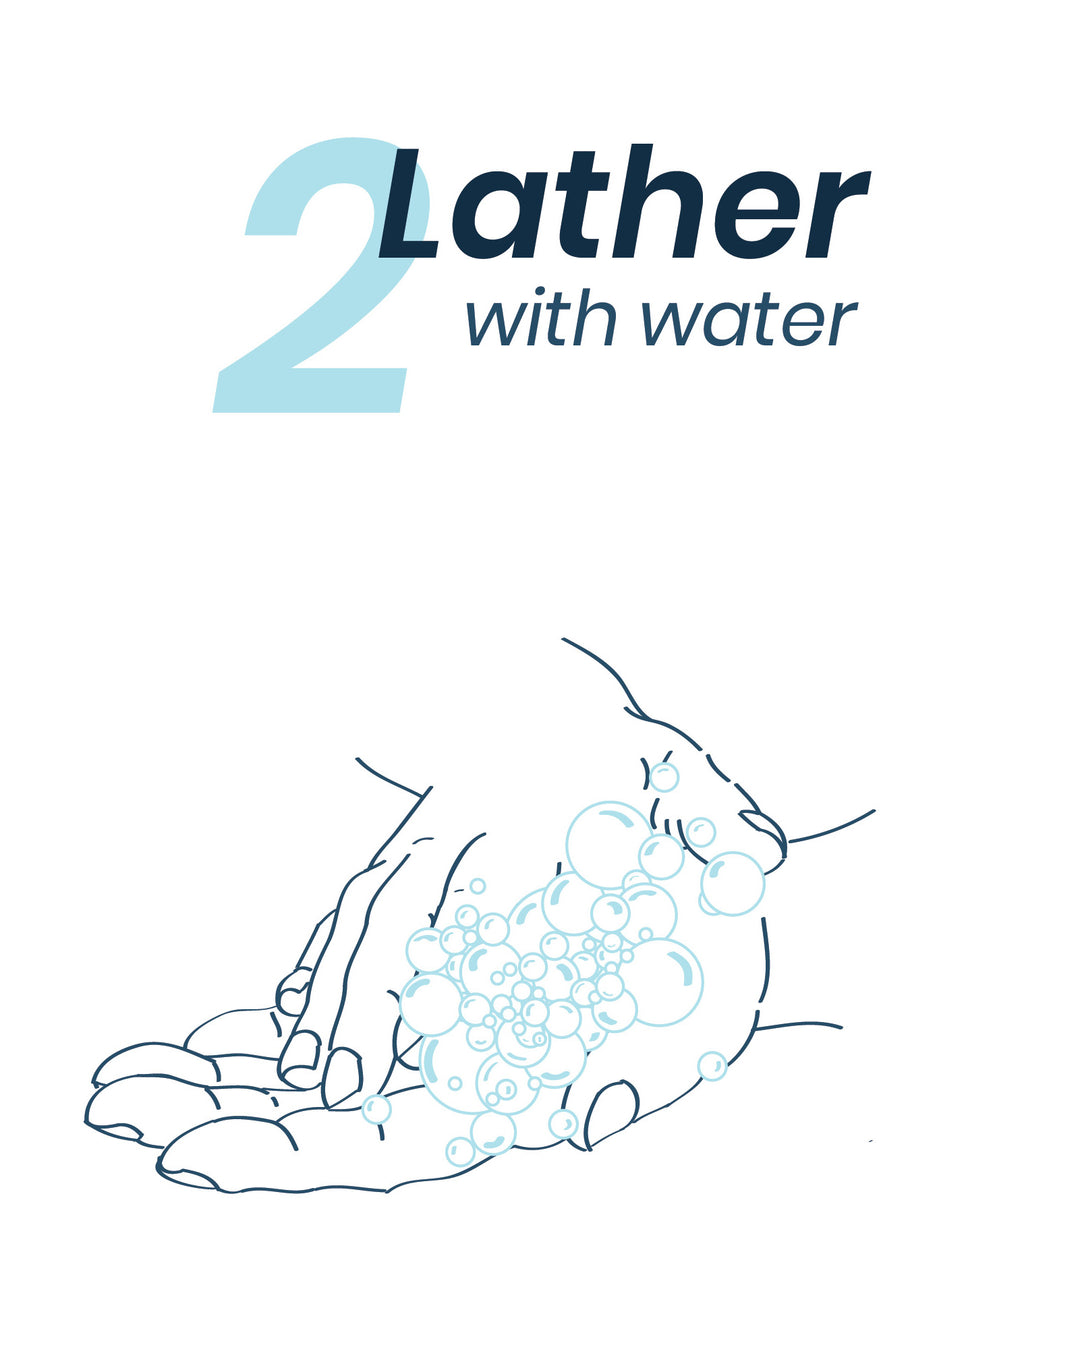 EarthSuds  Biodegradable Shampoo, Conditioner, Body Wash